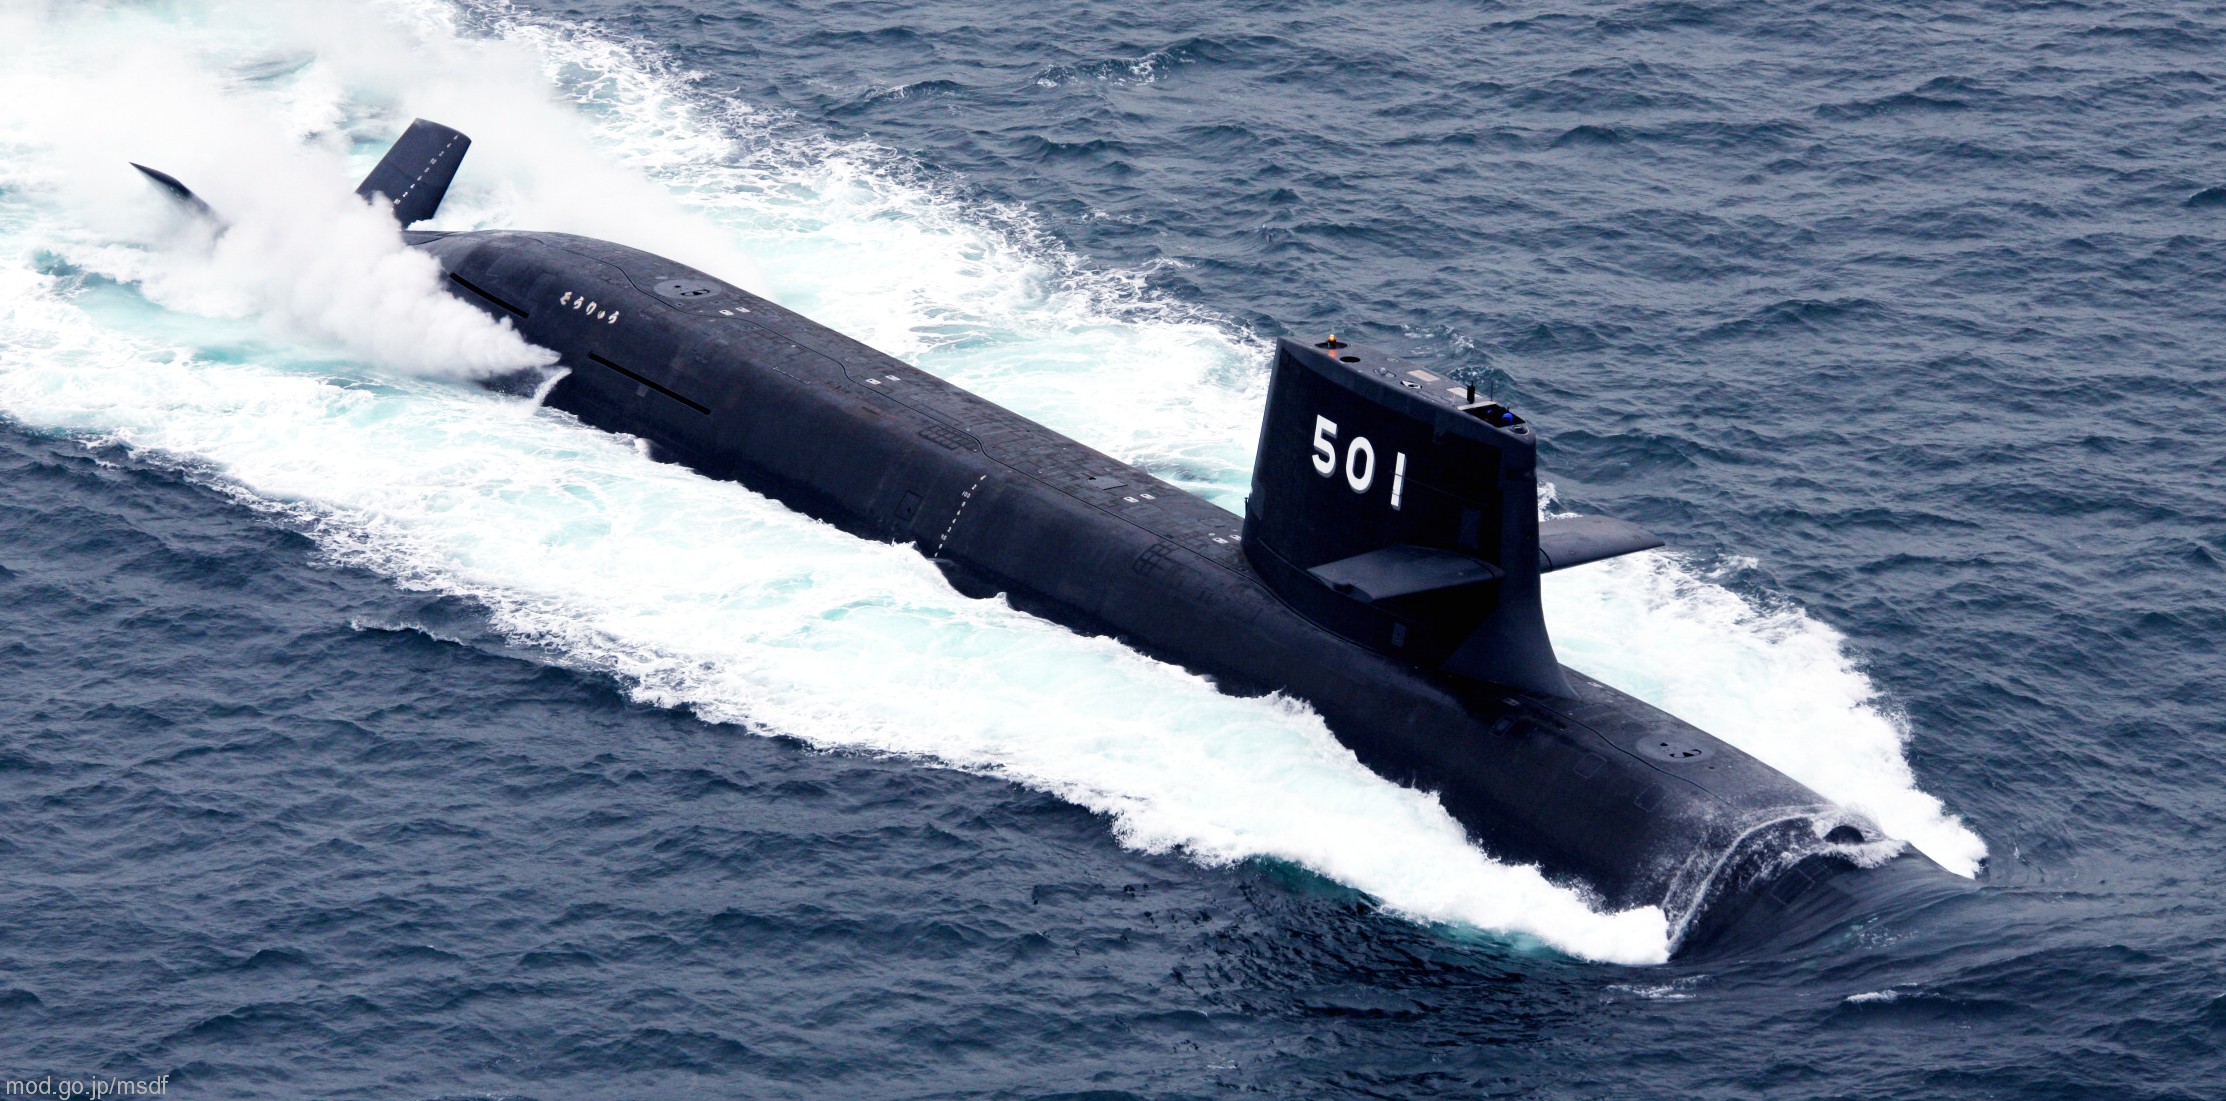 ss-501 js soryu 16ss class attack submarine ssk japan maritime self defense force jmsdf 03